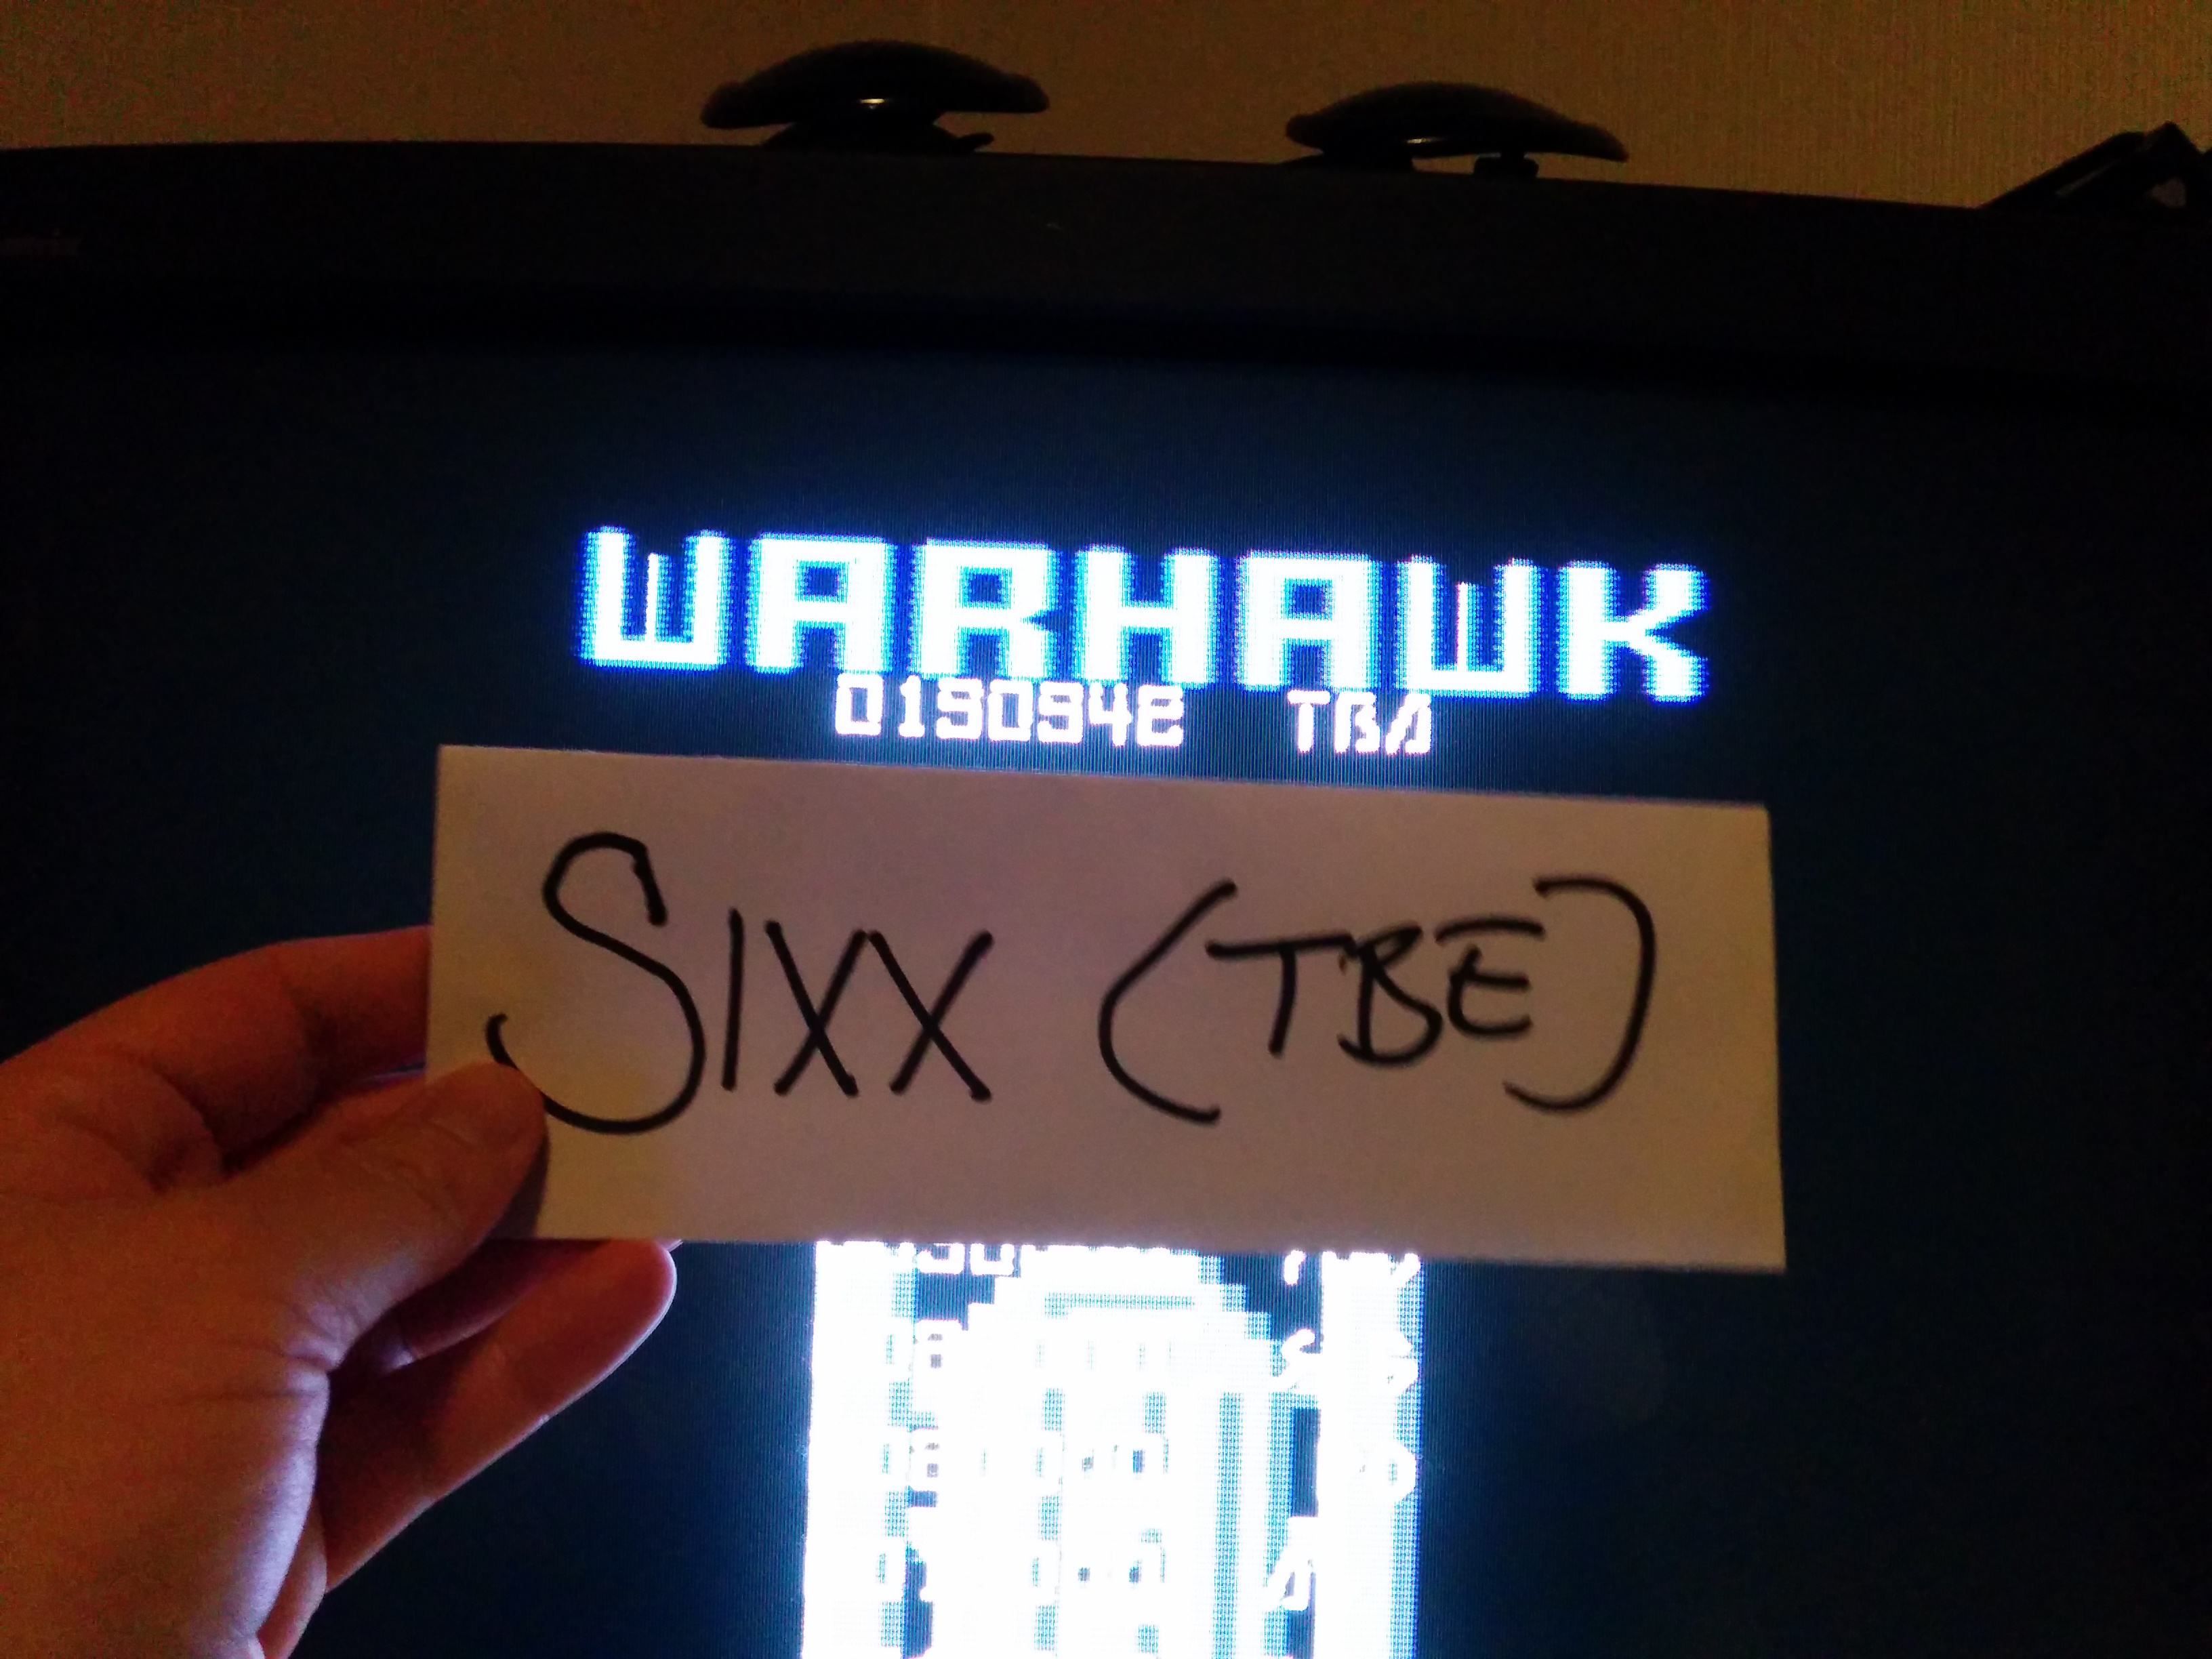 Warhawk 190,942 points